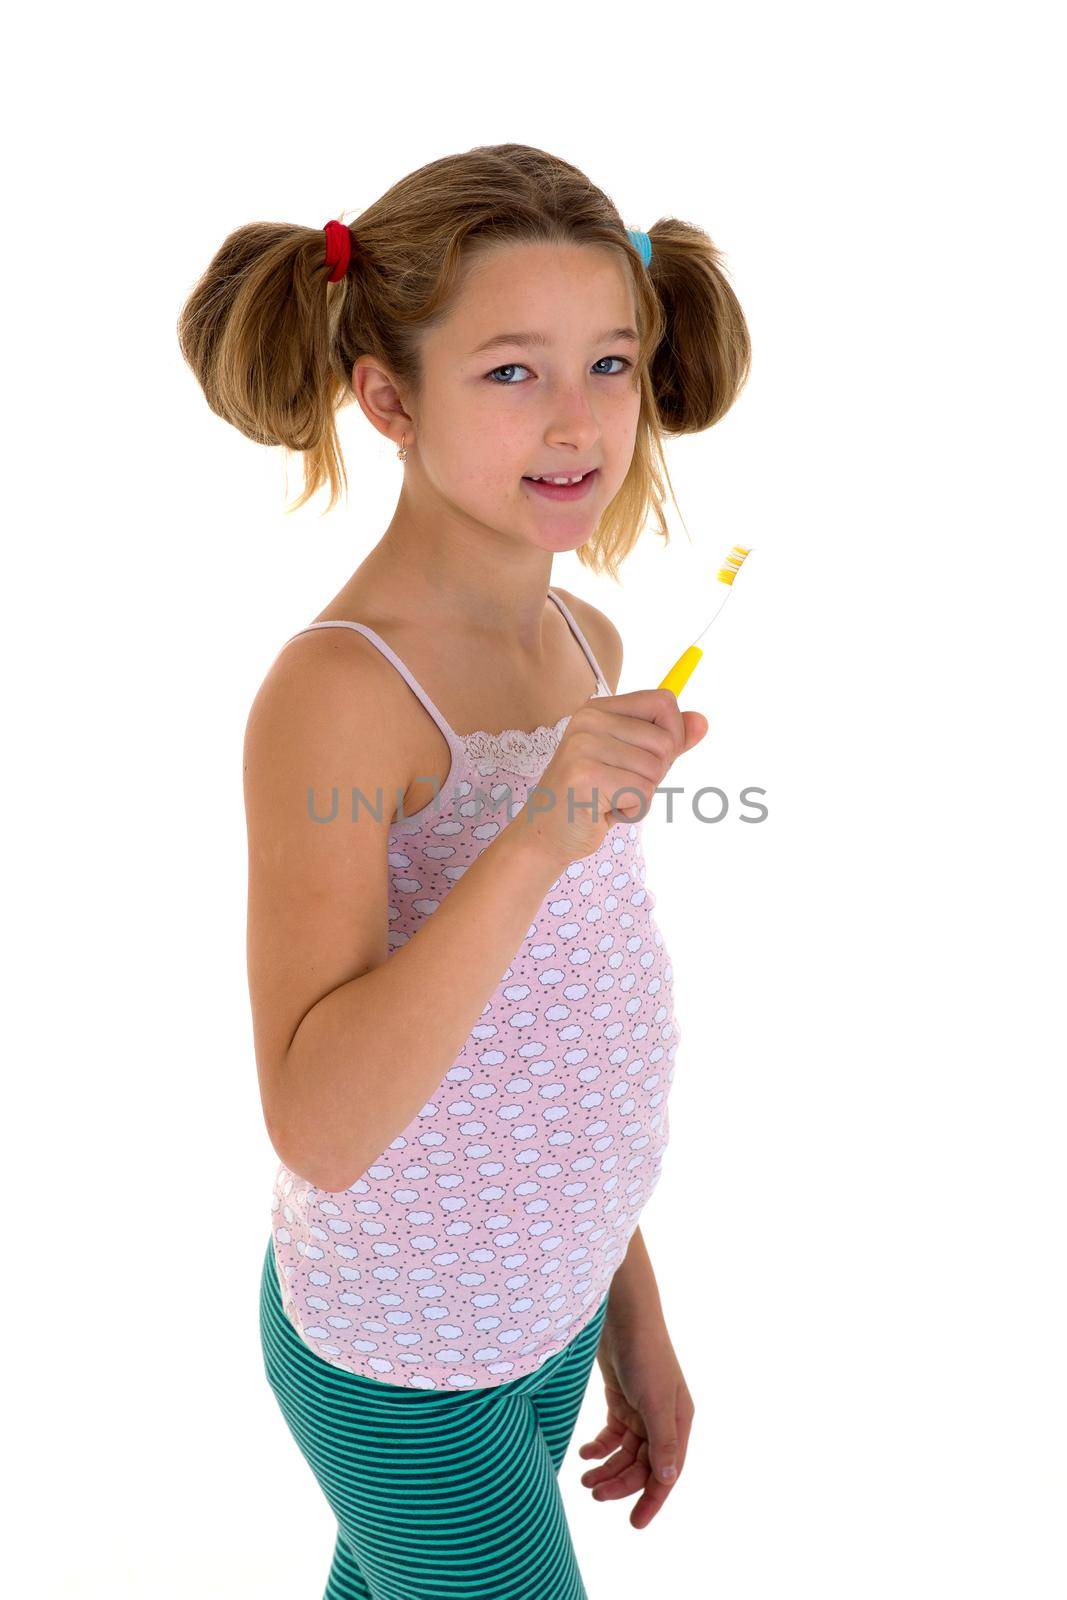 Smiling girl standing with toothbrush by kolesnikov_studio